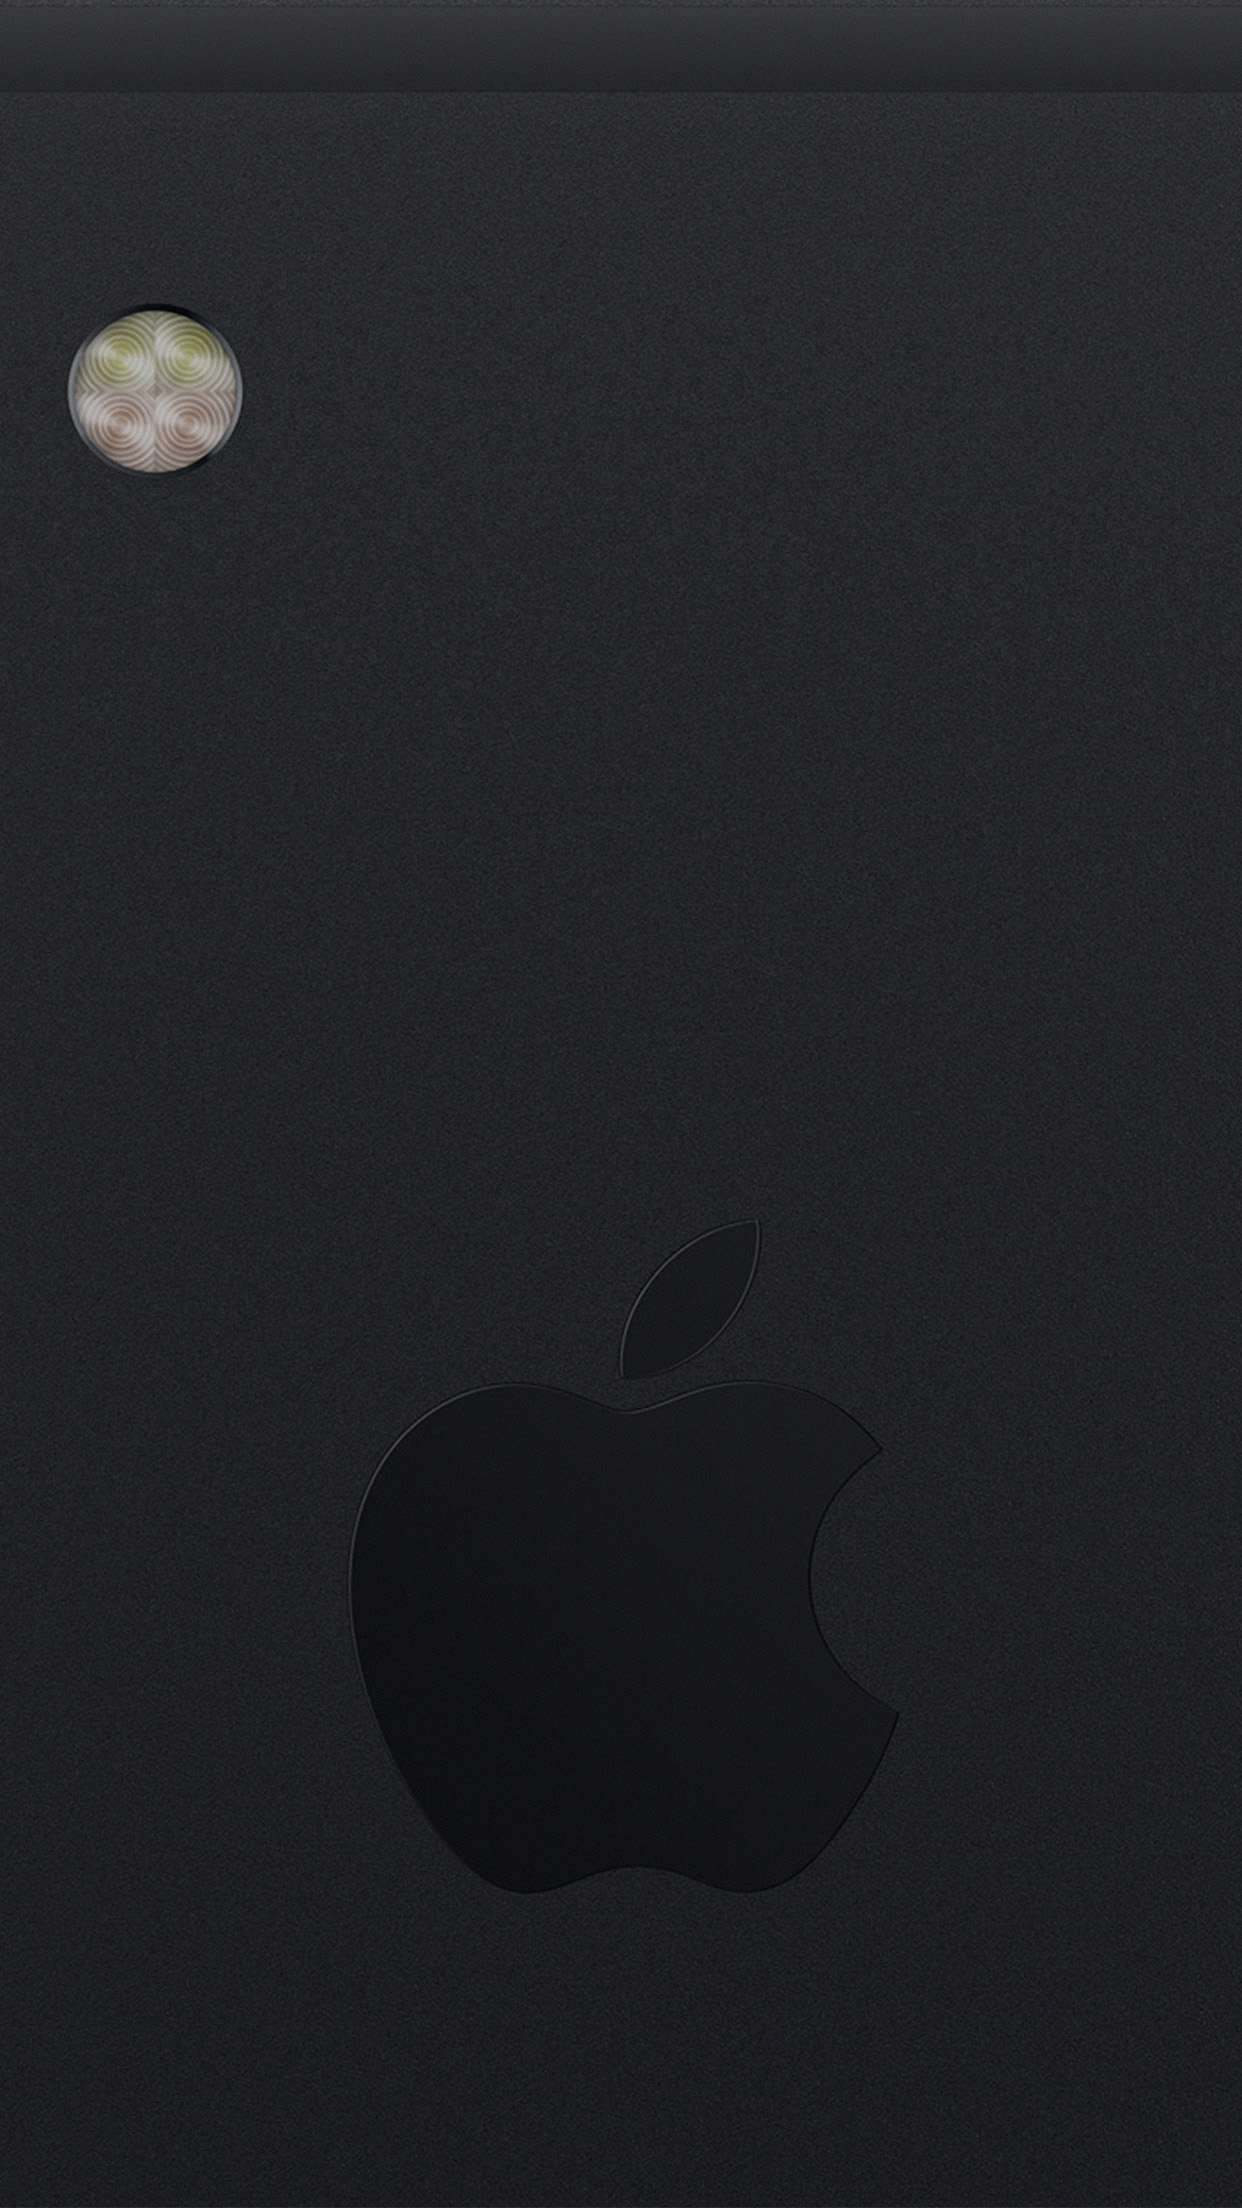 Back Iphone7 Black Apple Art Illustration Android wallpaper